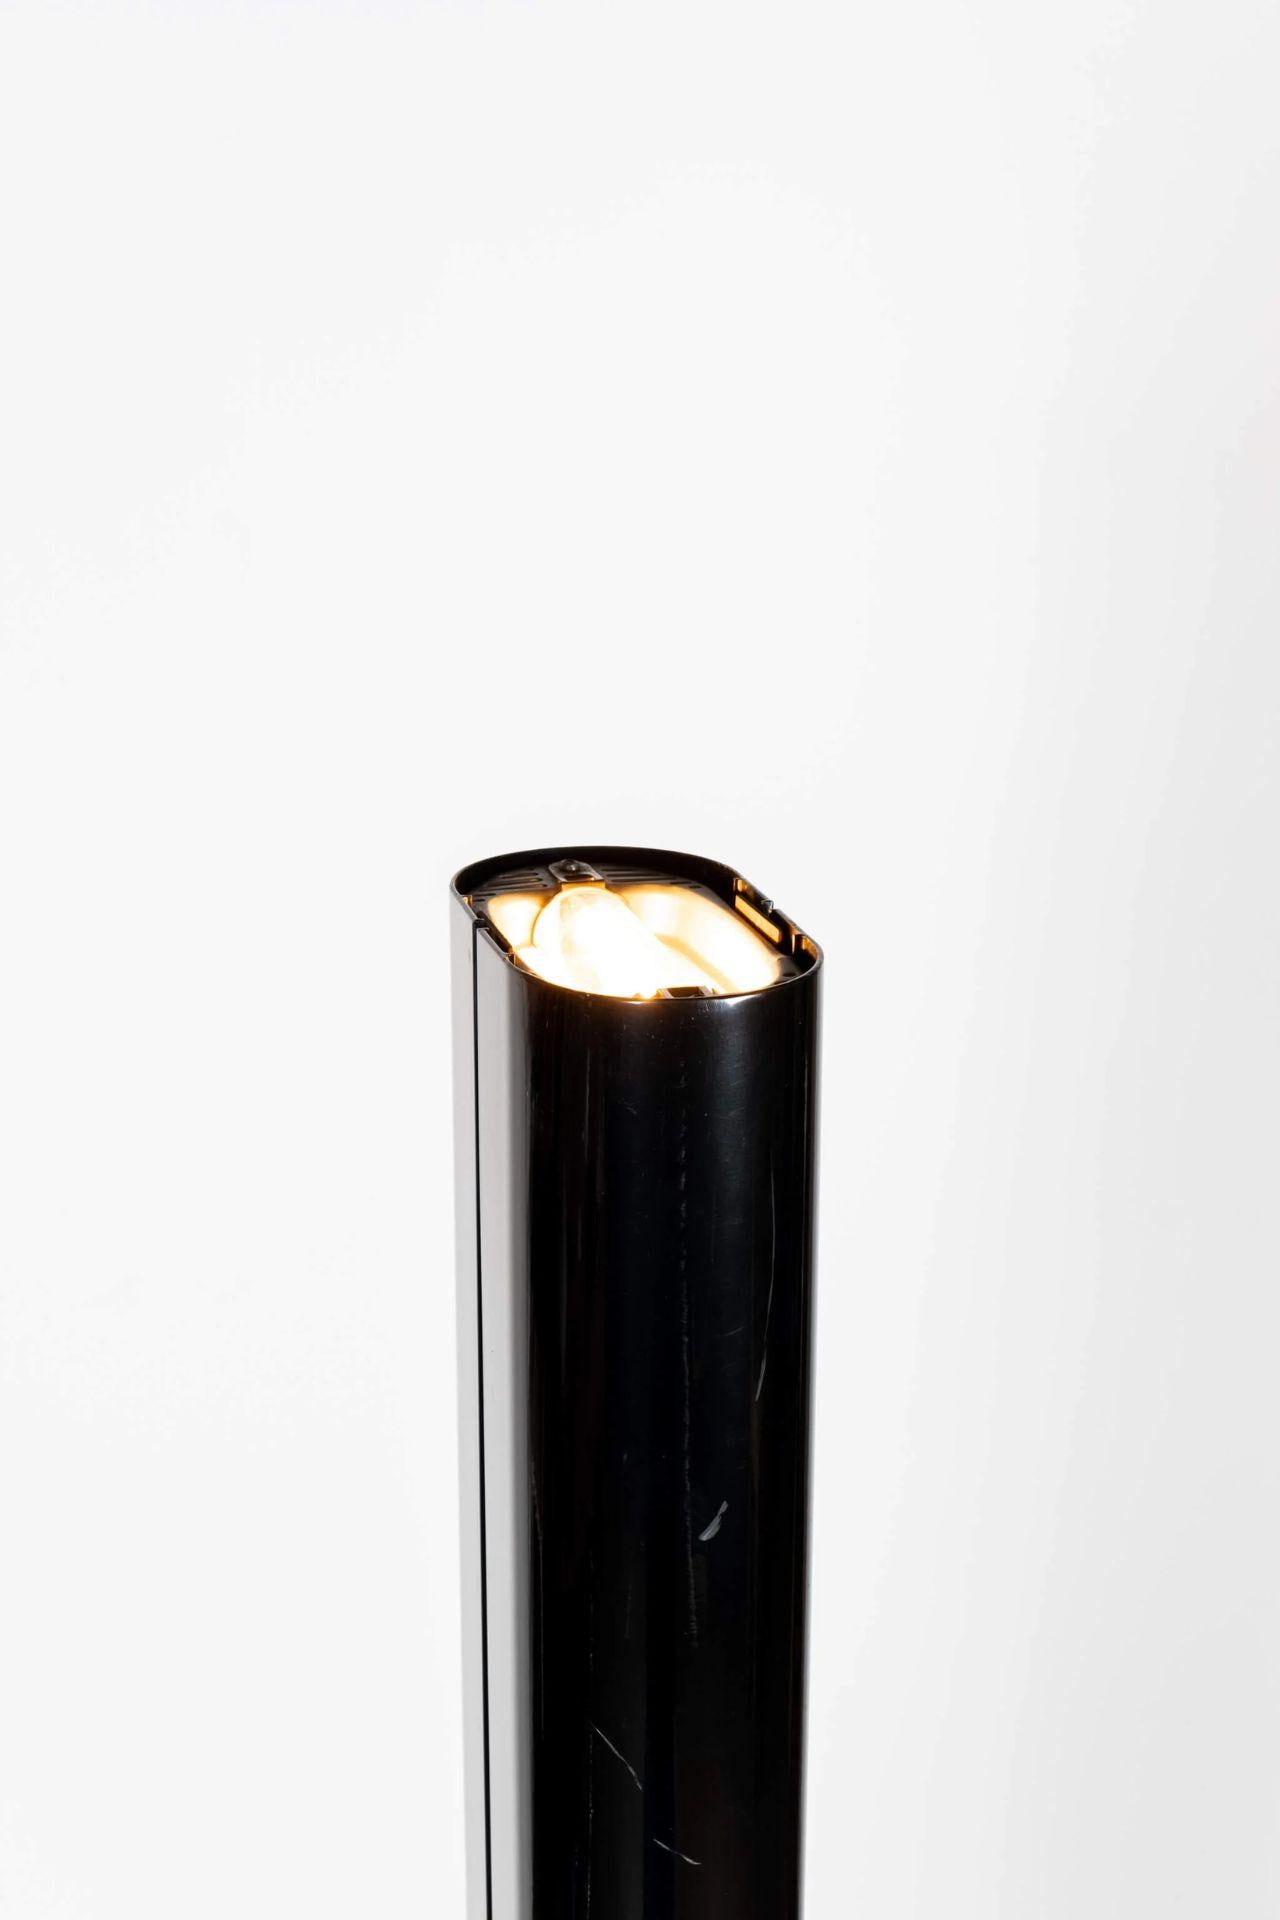 1979 Artemide Megaron Floor Lamp by Gianfranco Frattini In Good Condition For Sale In Toronto, CA